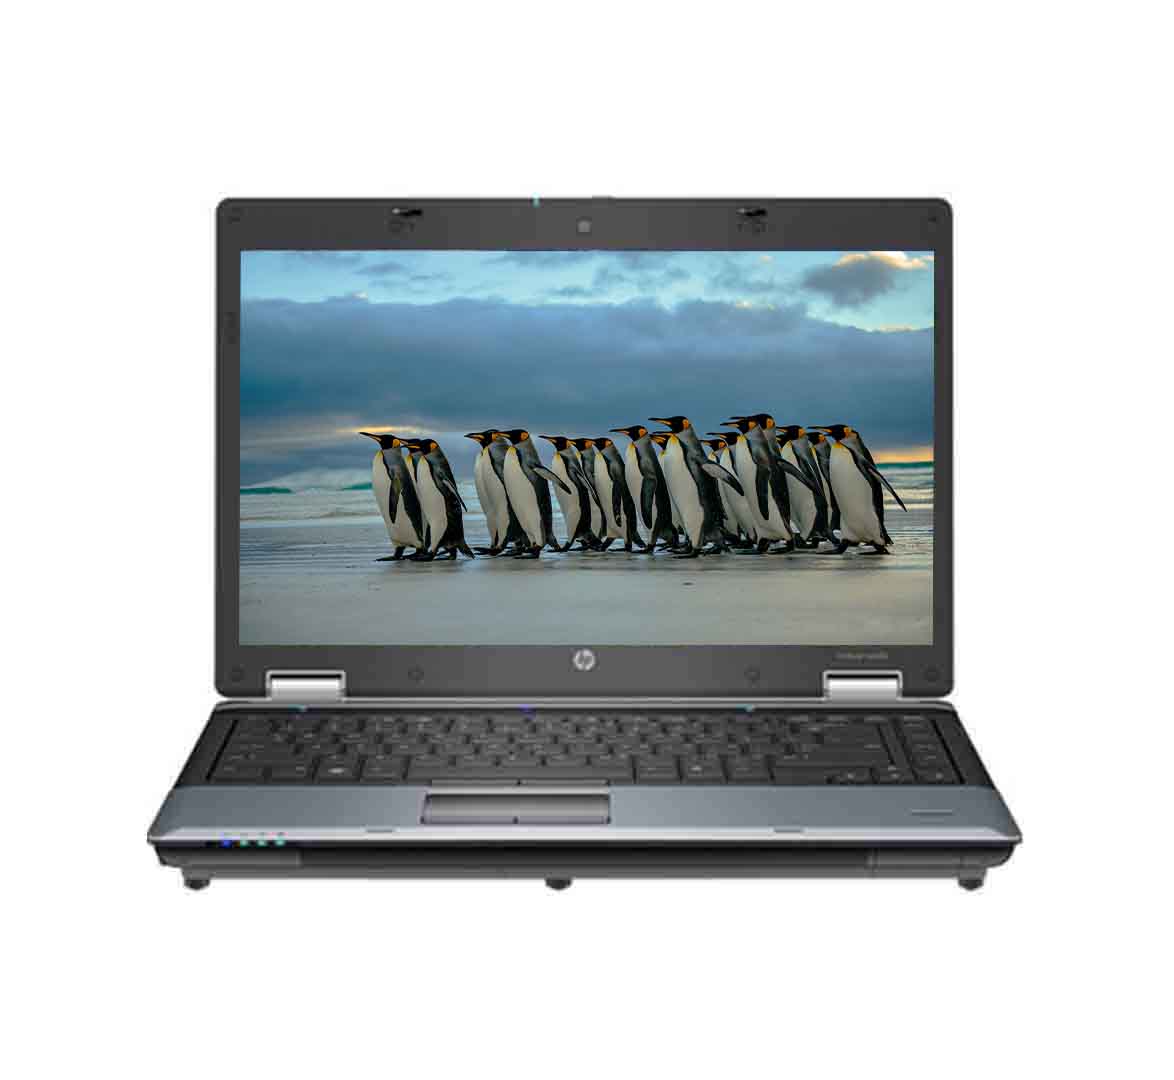 HP EliteBook 8440p, Intel Core i5-1st Generation CPU, 8GB RAM, 500GB HDD, 14.1 inch Display, Windows 10 Pro, Refurbished Laptop